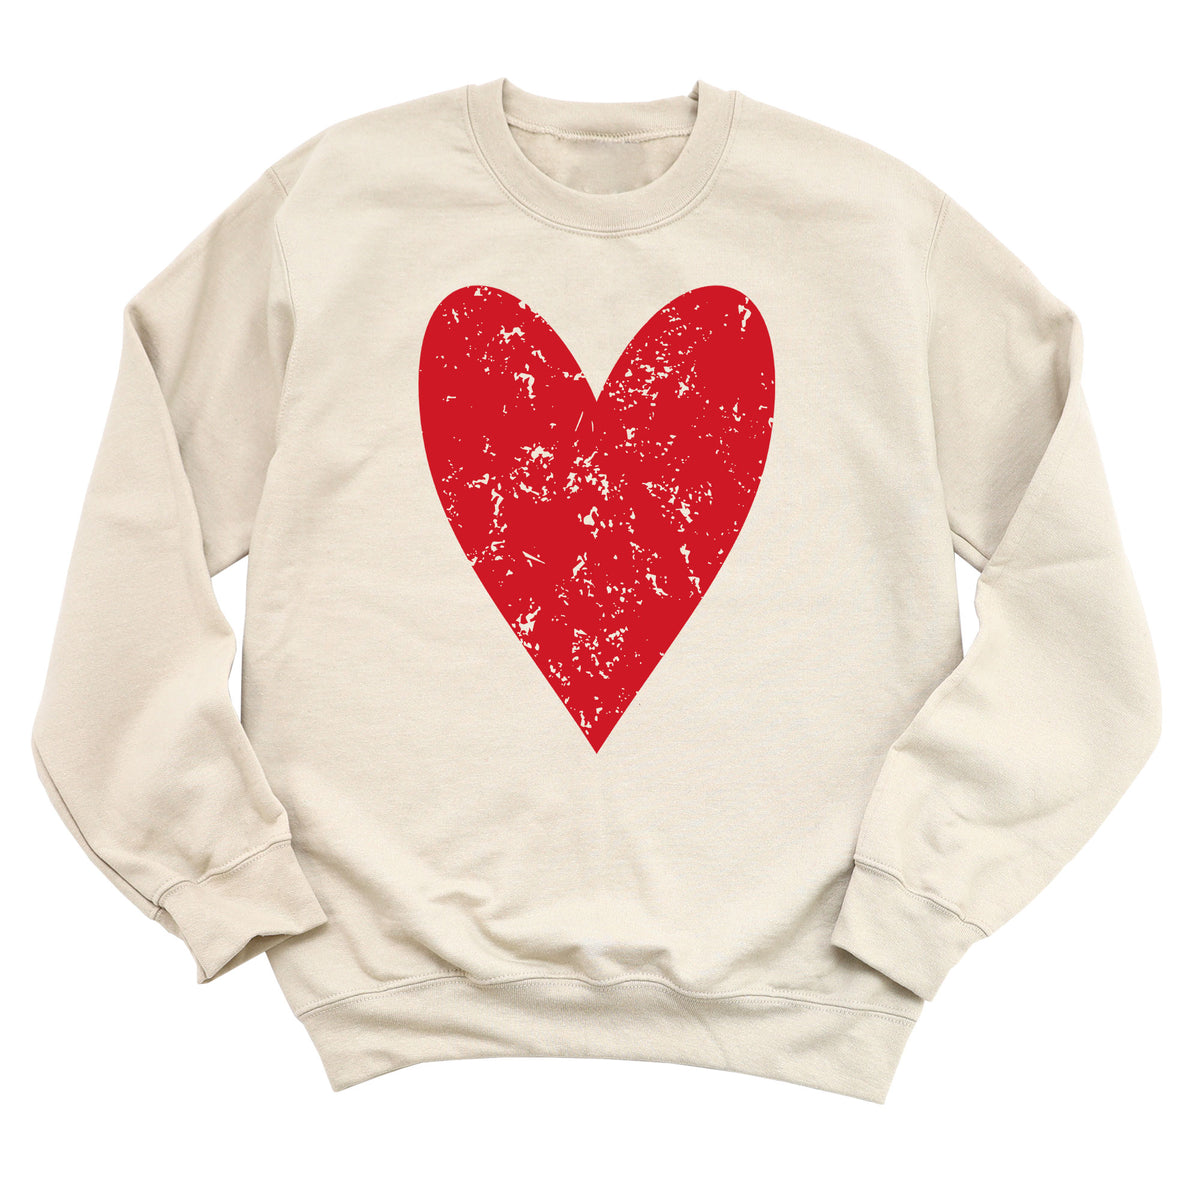 Distressed Heart Sweatshirt